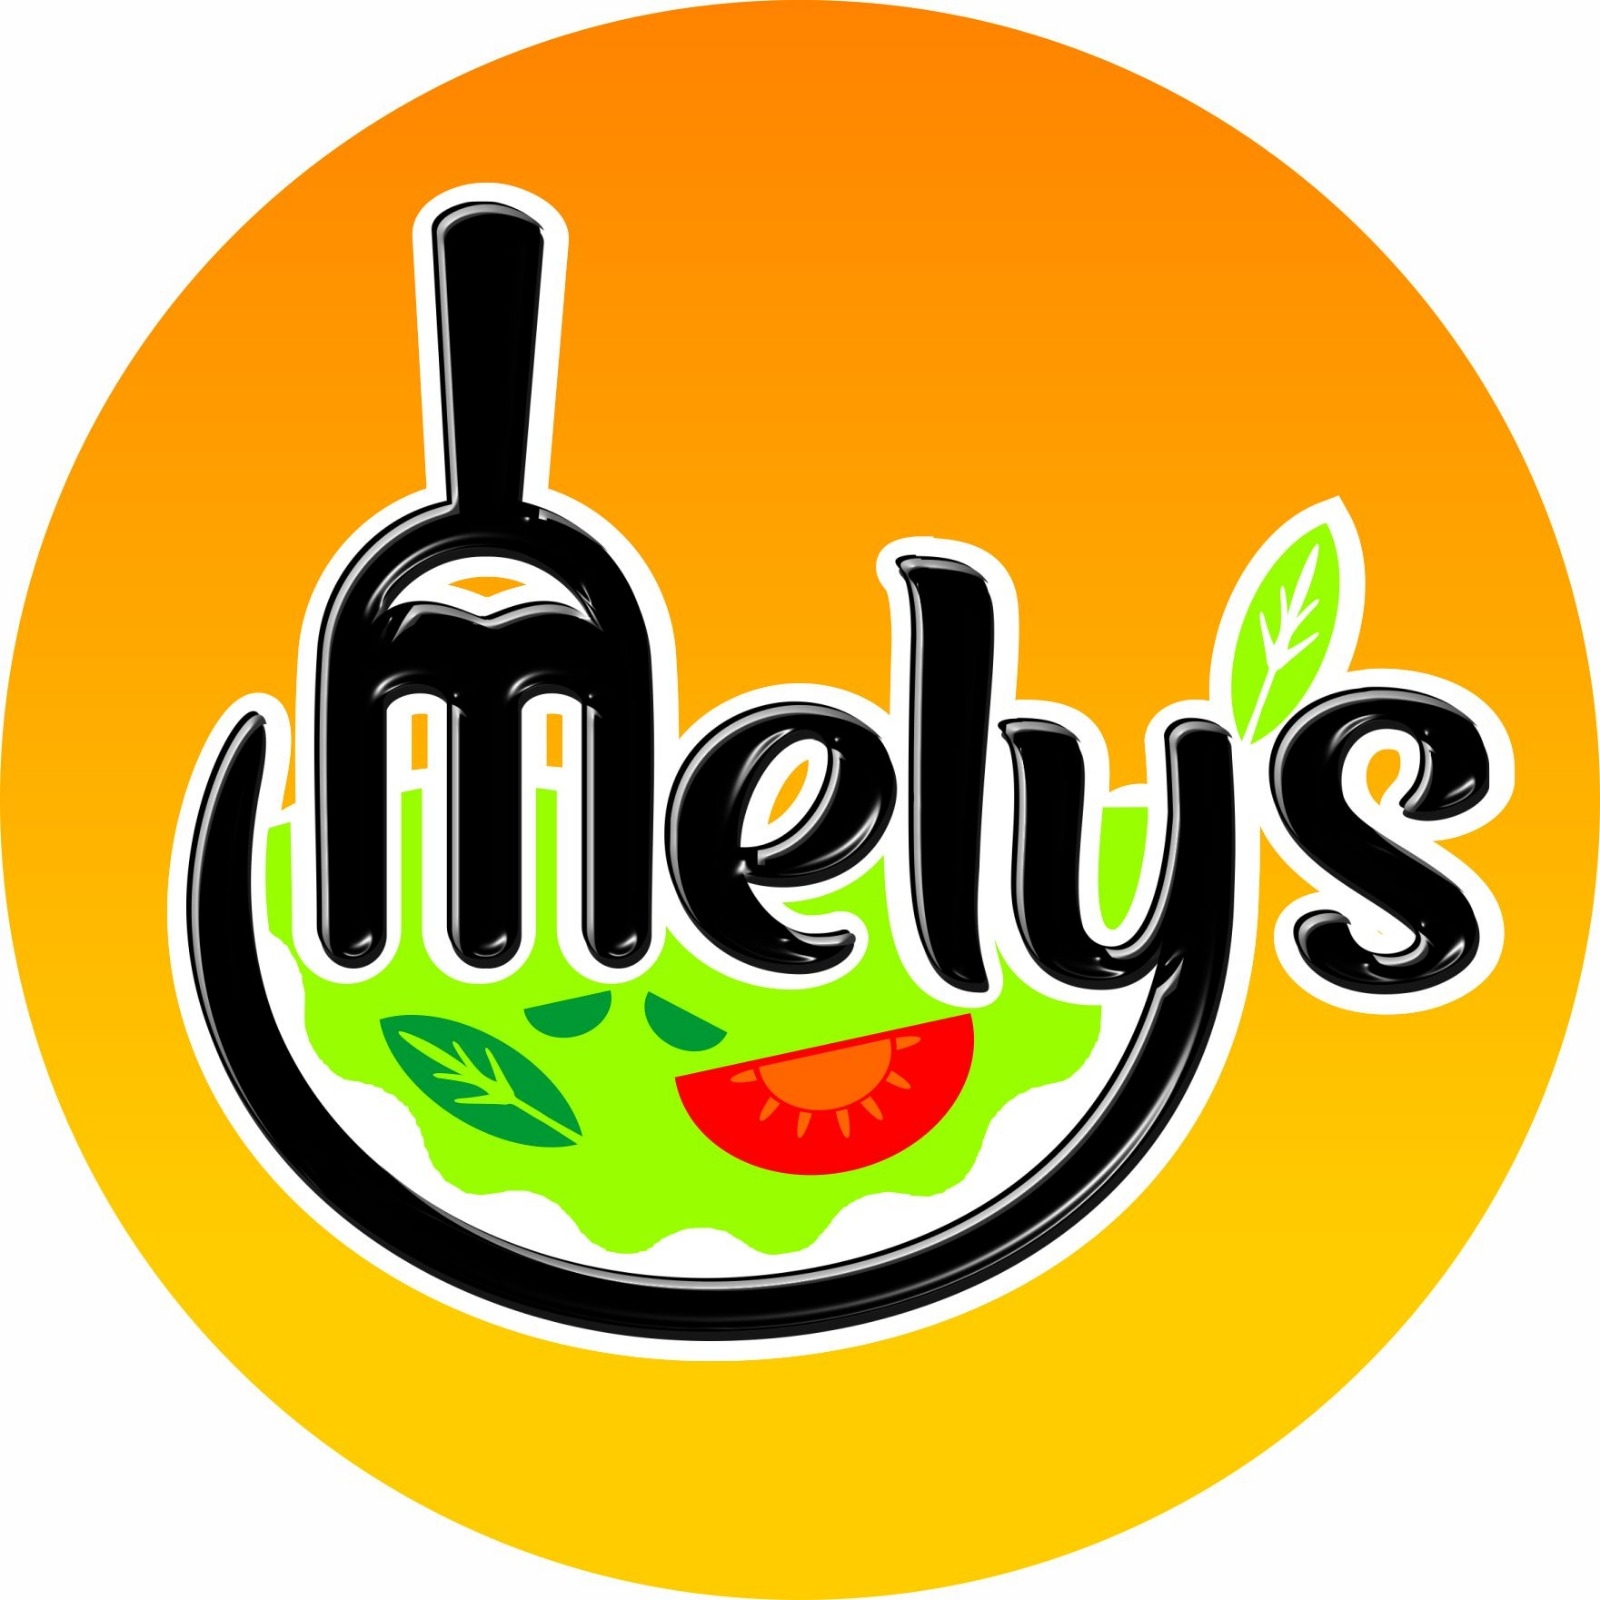 Mely's logo